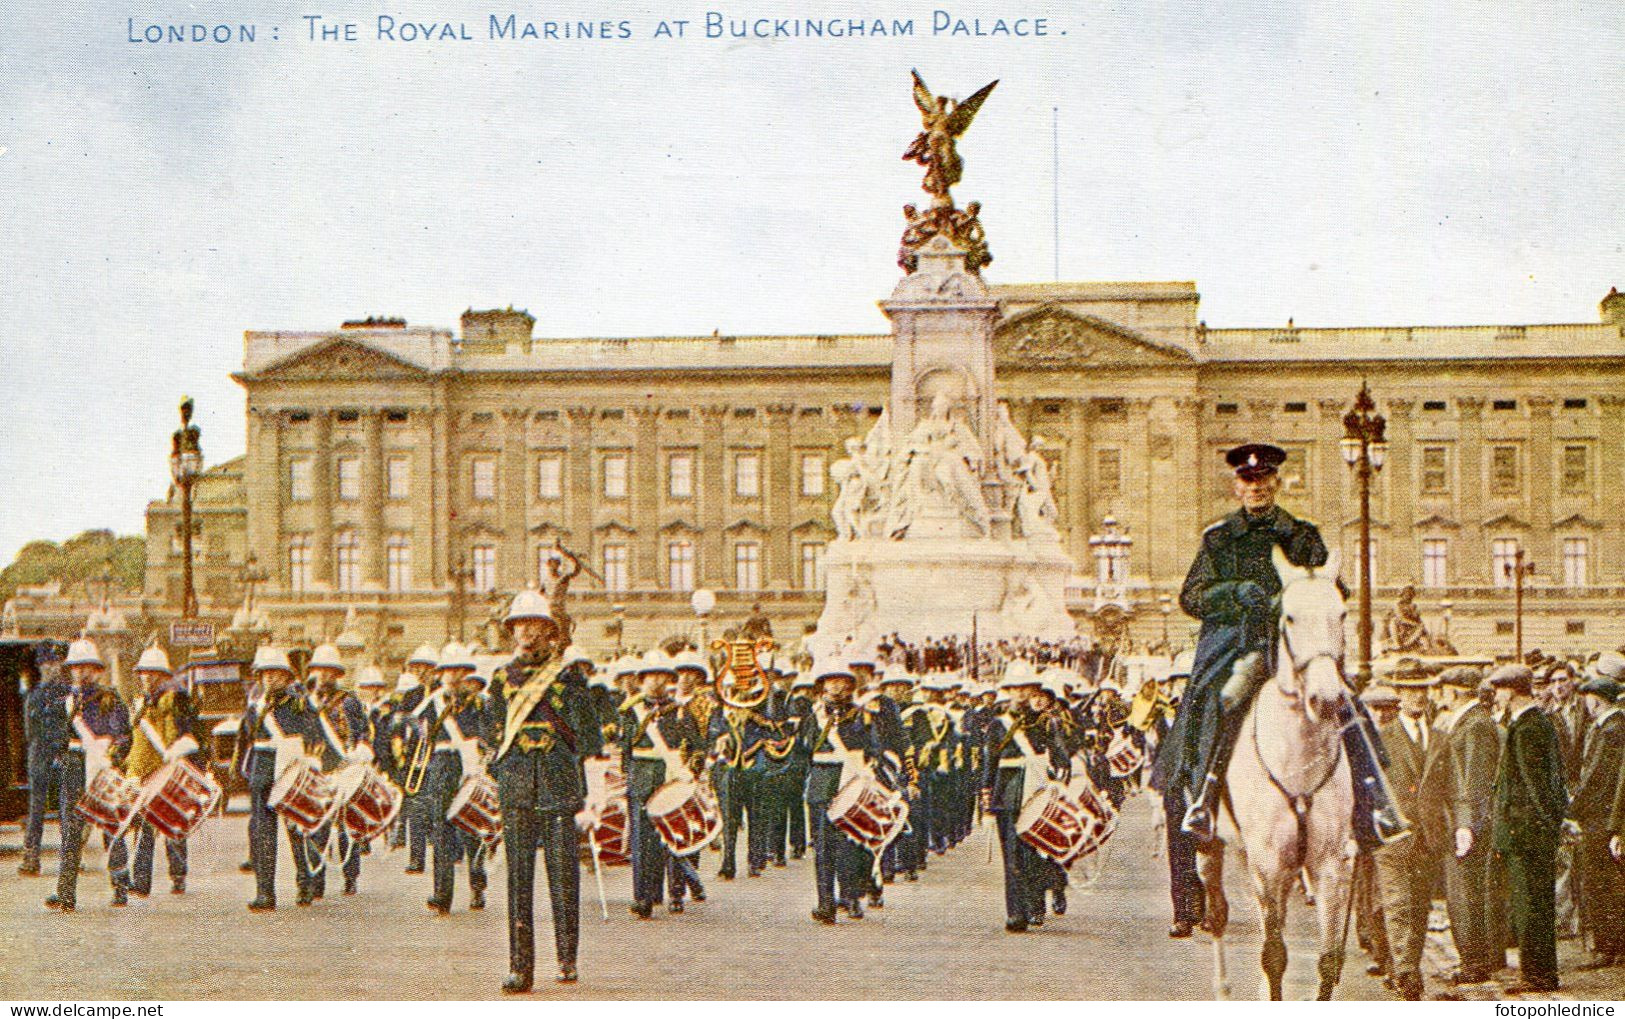 807 LONDON THE ROYAL MARINES AT BUCKINGHAM PALACE COPYRIGHT PUBLICATION PHOTOCHROM Co. LTD LONDON AND TUNBRIDGE WELLS - Buckingham Palace